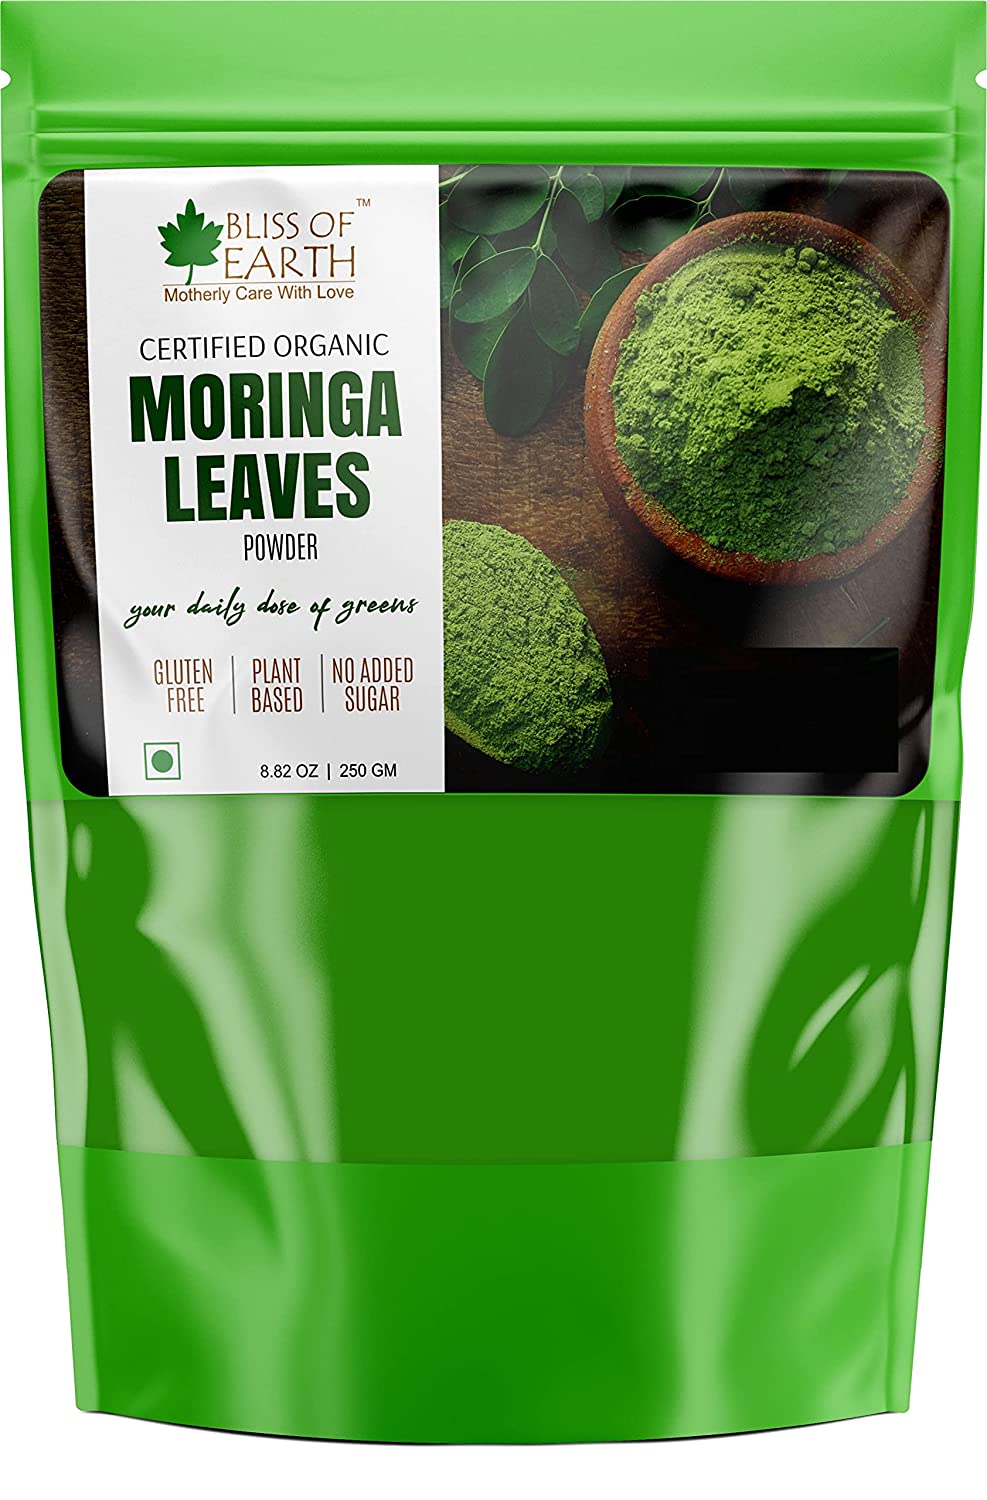 Bliss of Earth Organic Moringa Leaves Powder Image